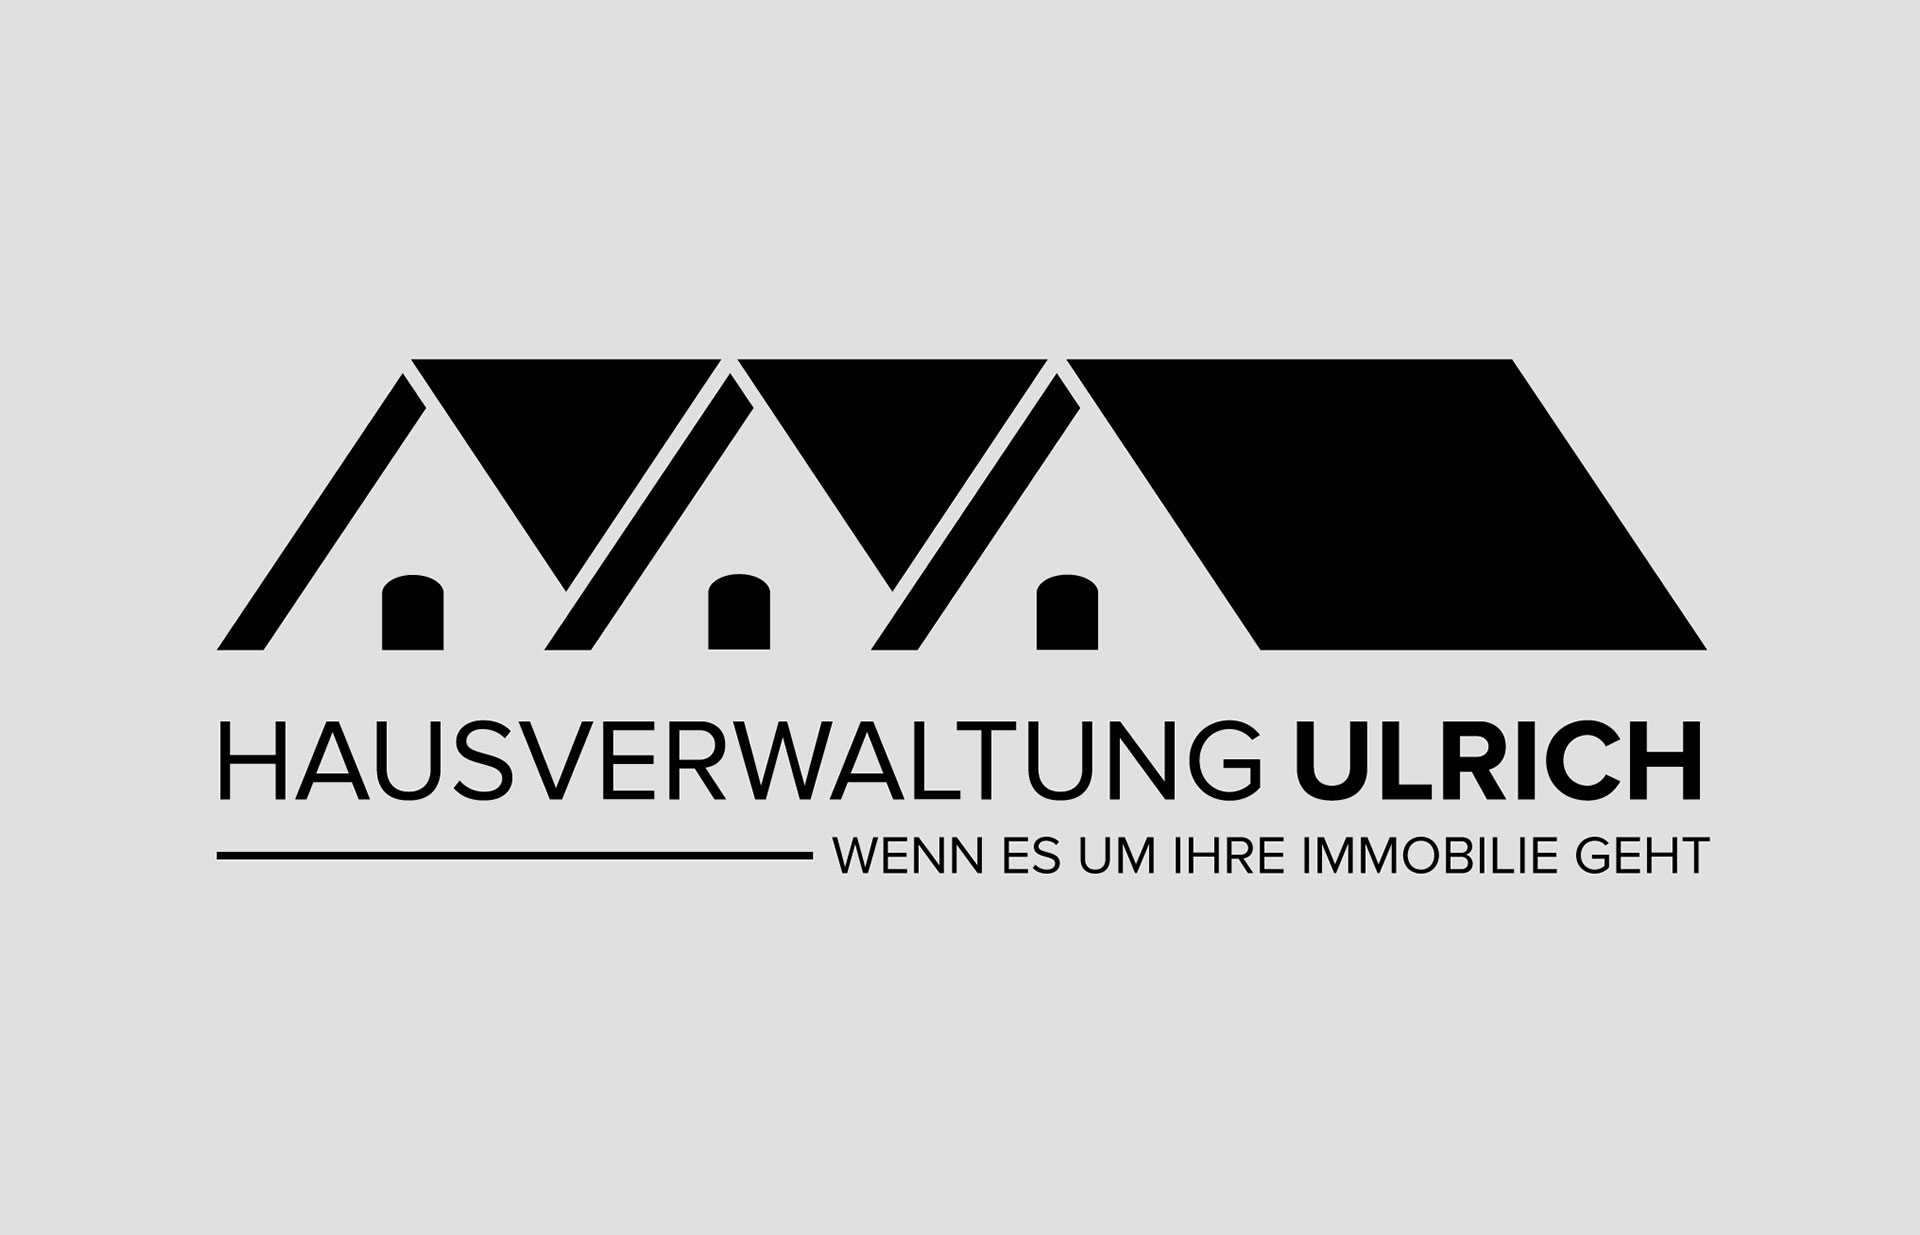 Hausverwaltung Ulrich Logo Art Shipper Designstudio